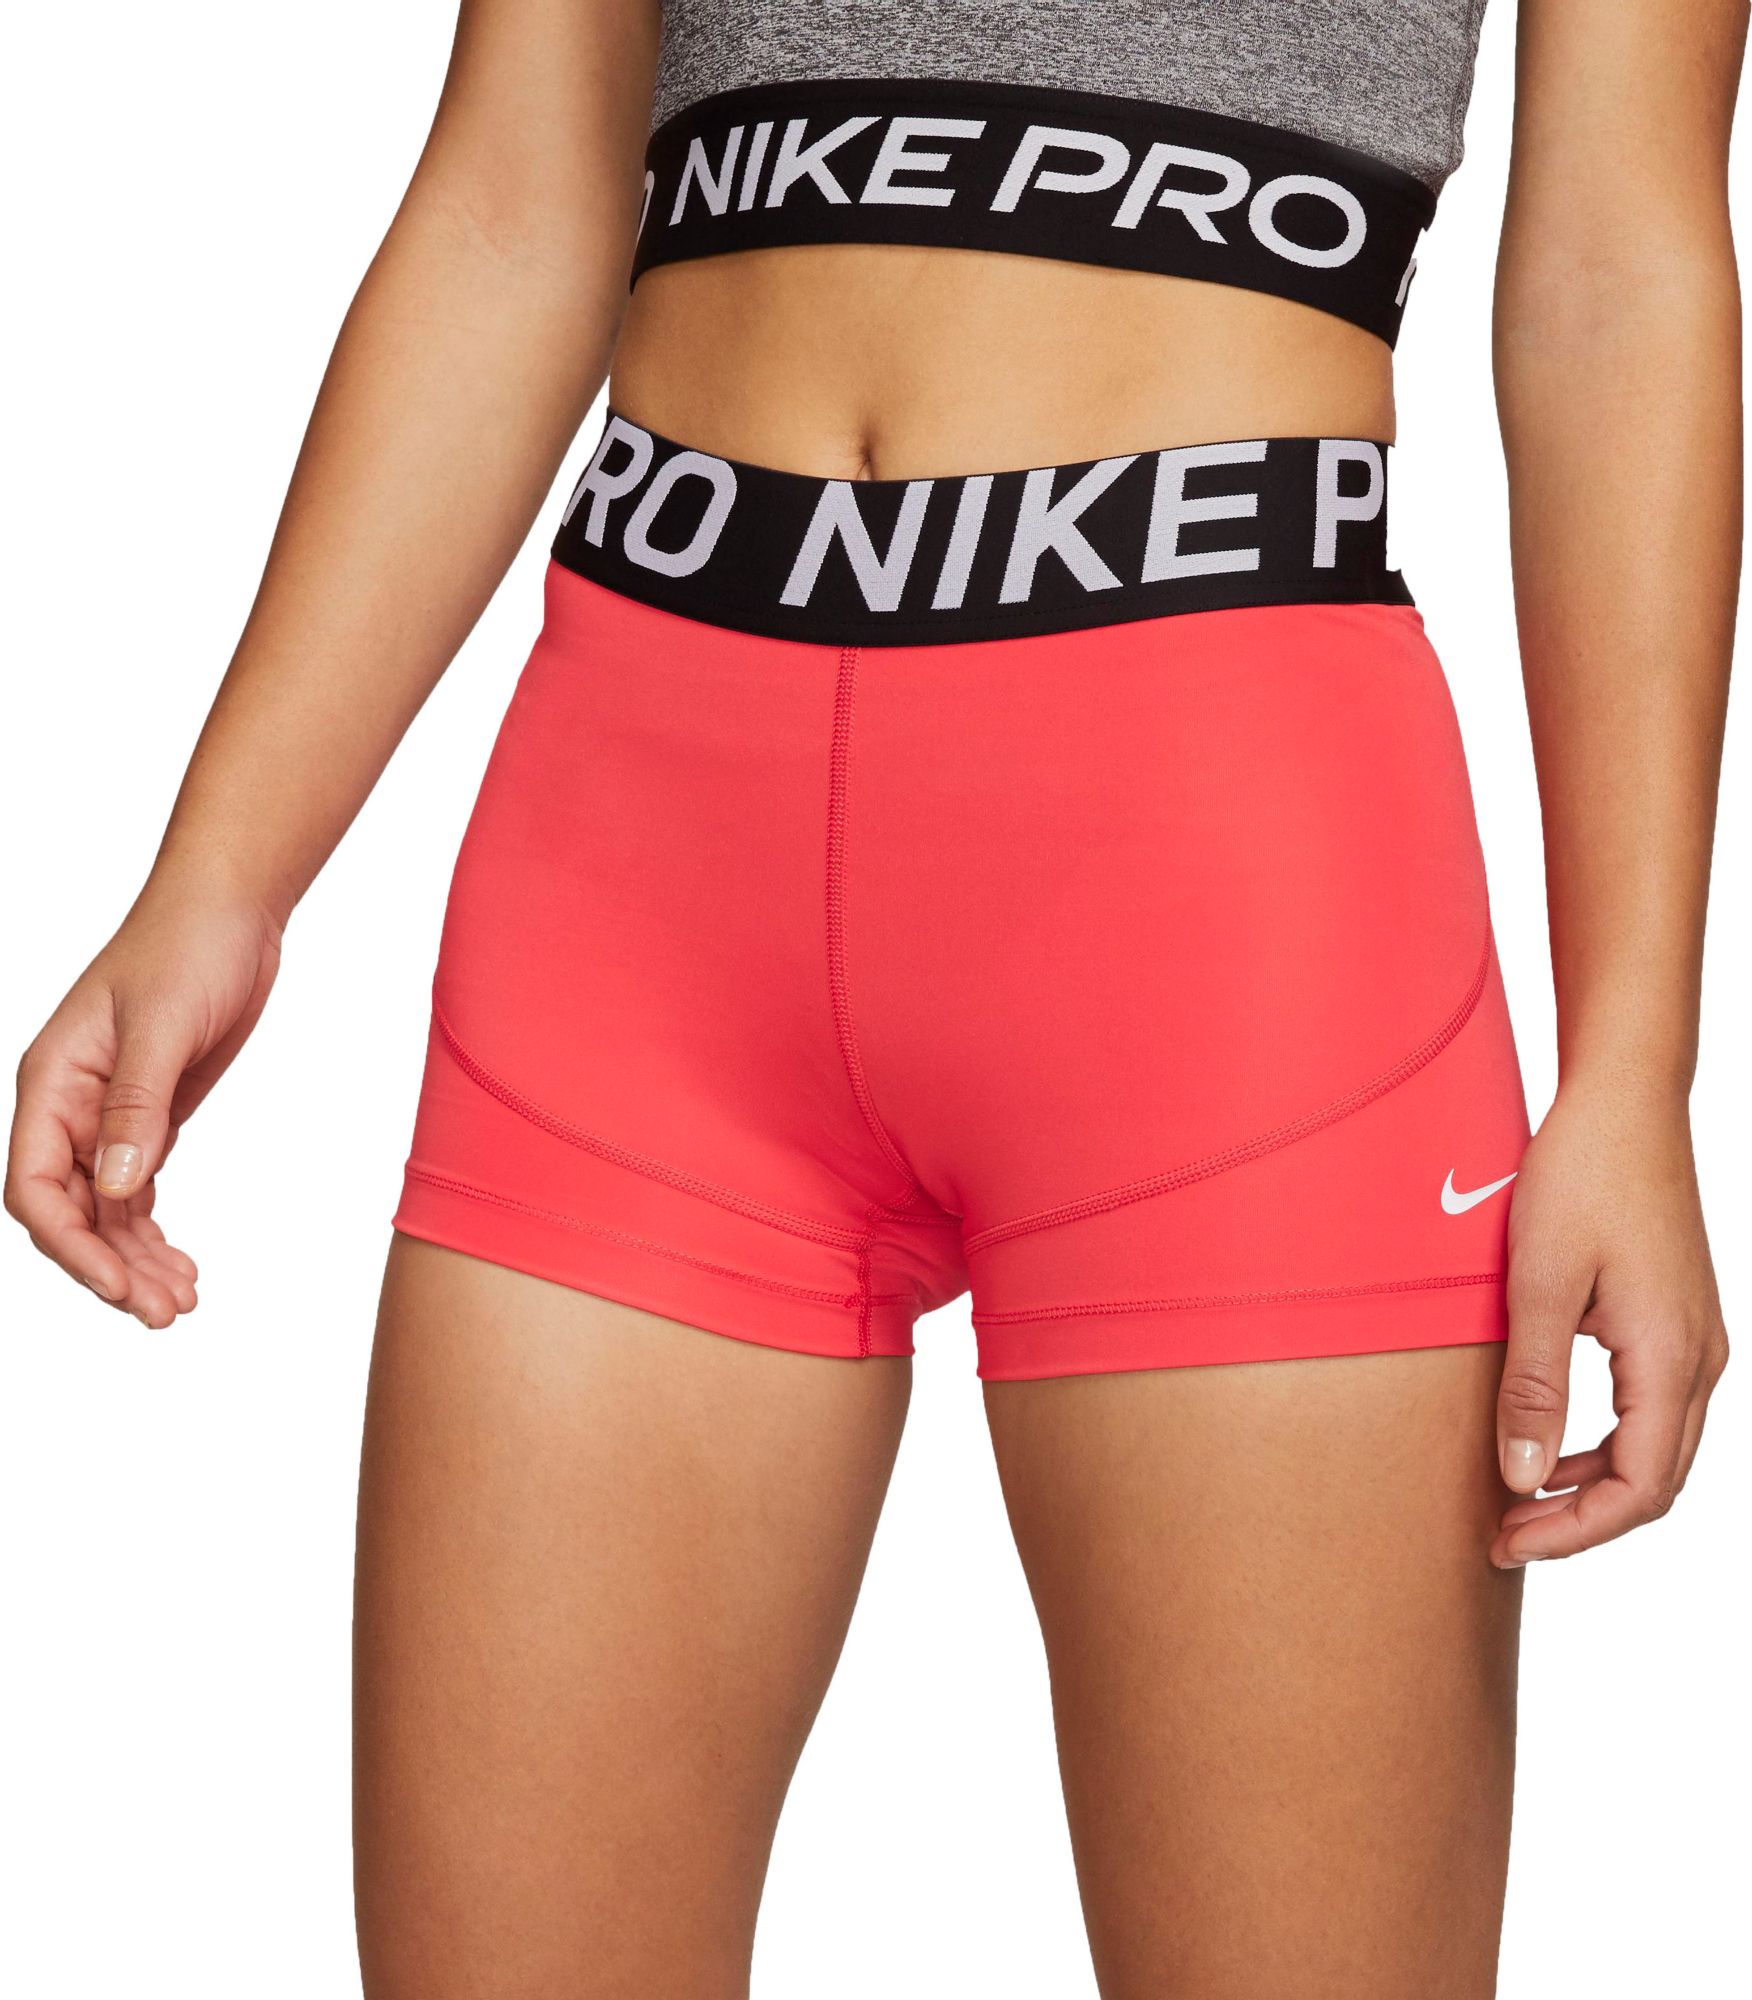 dick's sporting goods nike shorts